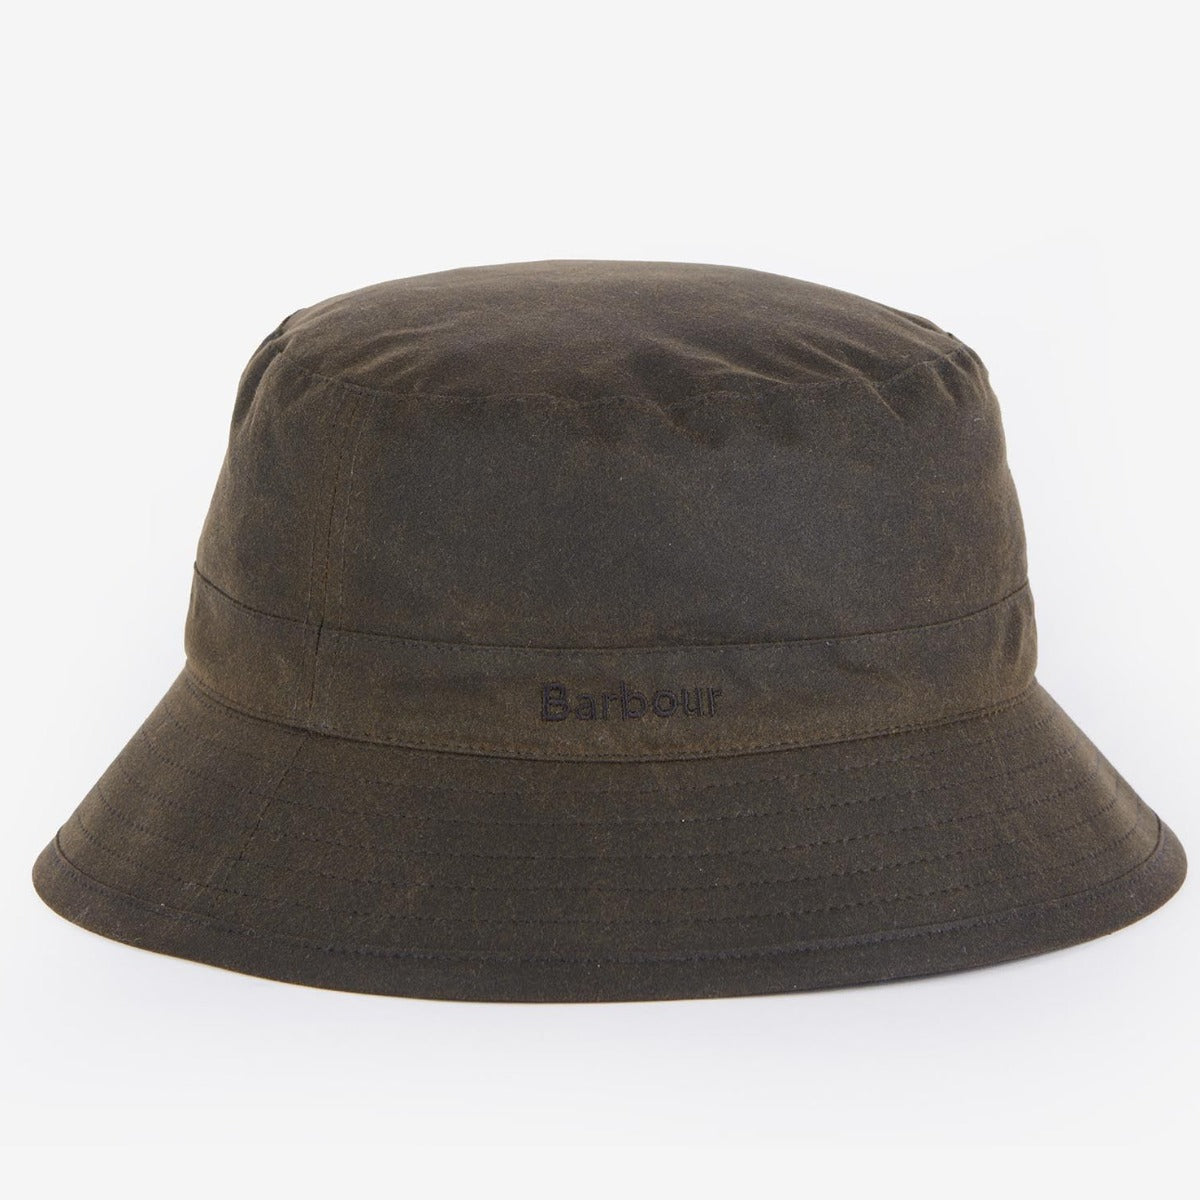 Barbour Mens Wax Sports Bucket Hat Black Waterproof Size S, M, L